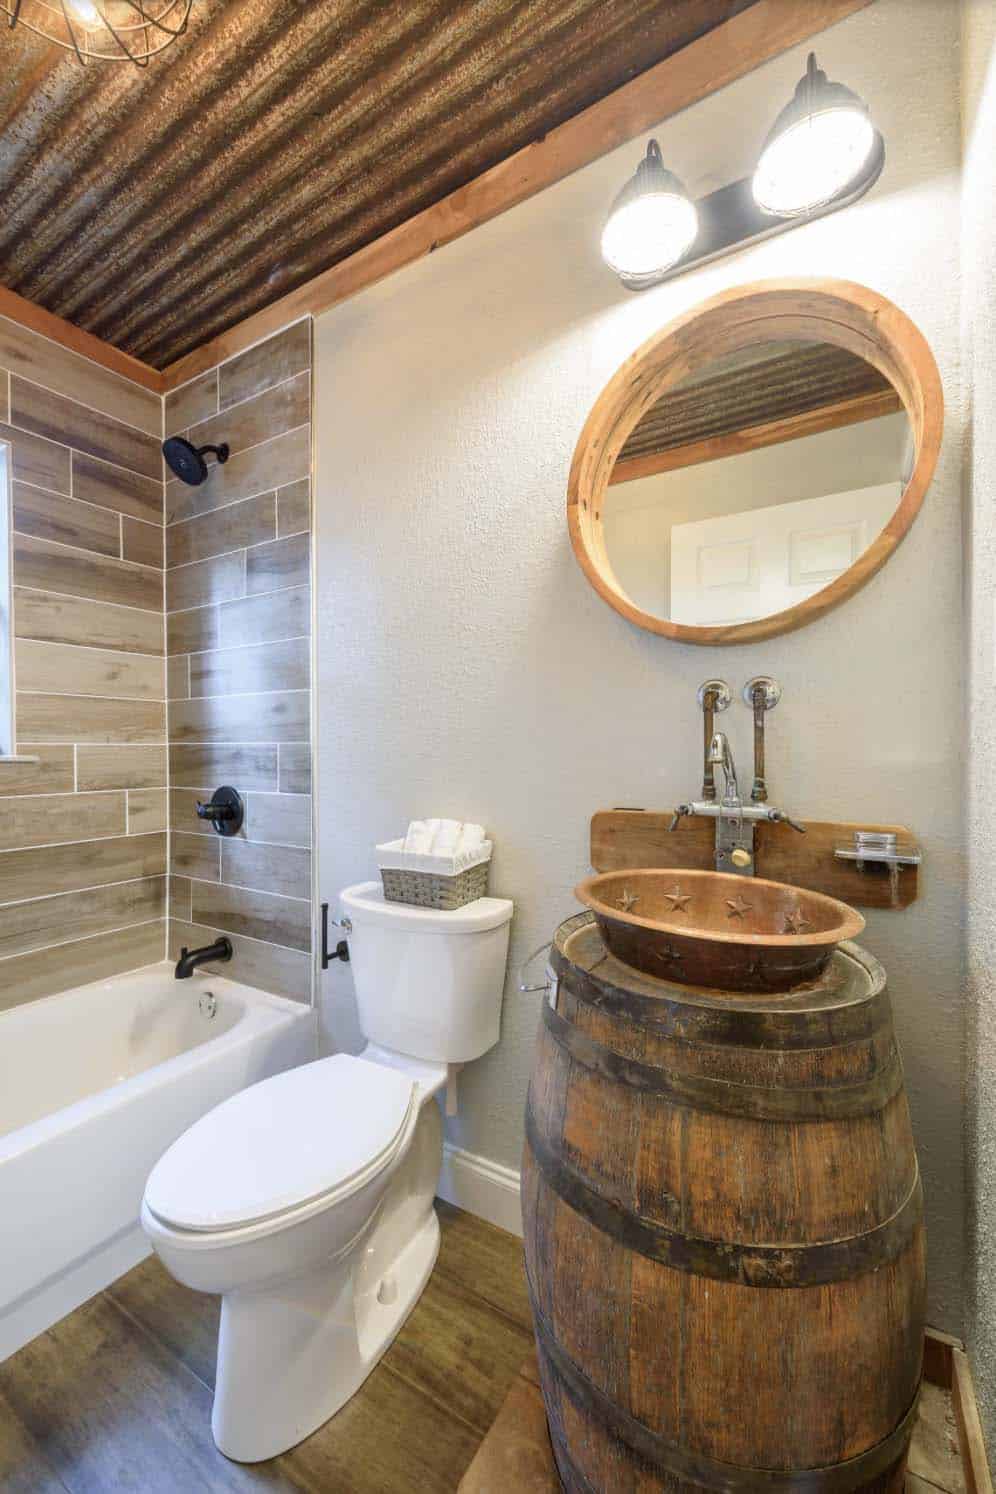 Custom whiskey barrel bathroom vanity with a hammered copper sink